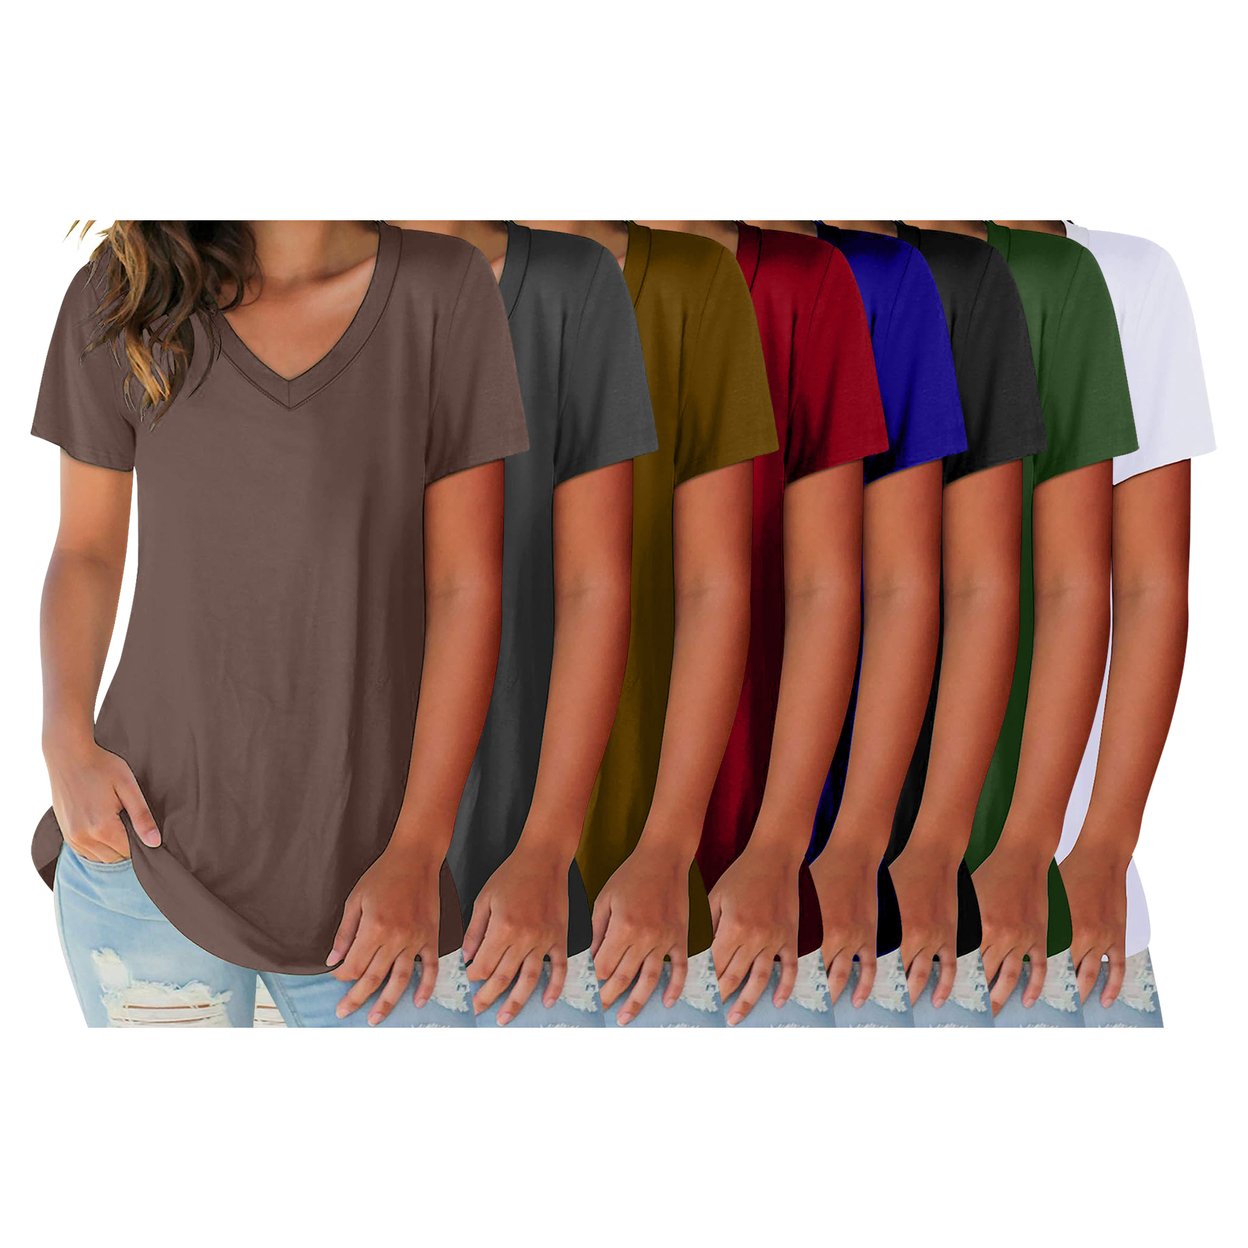 2-Pack: Women's Ultra Soft Smooth Cotton Blend Basic V-Neck Short Sleeve Shirts - Black & Red, X-large